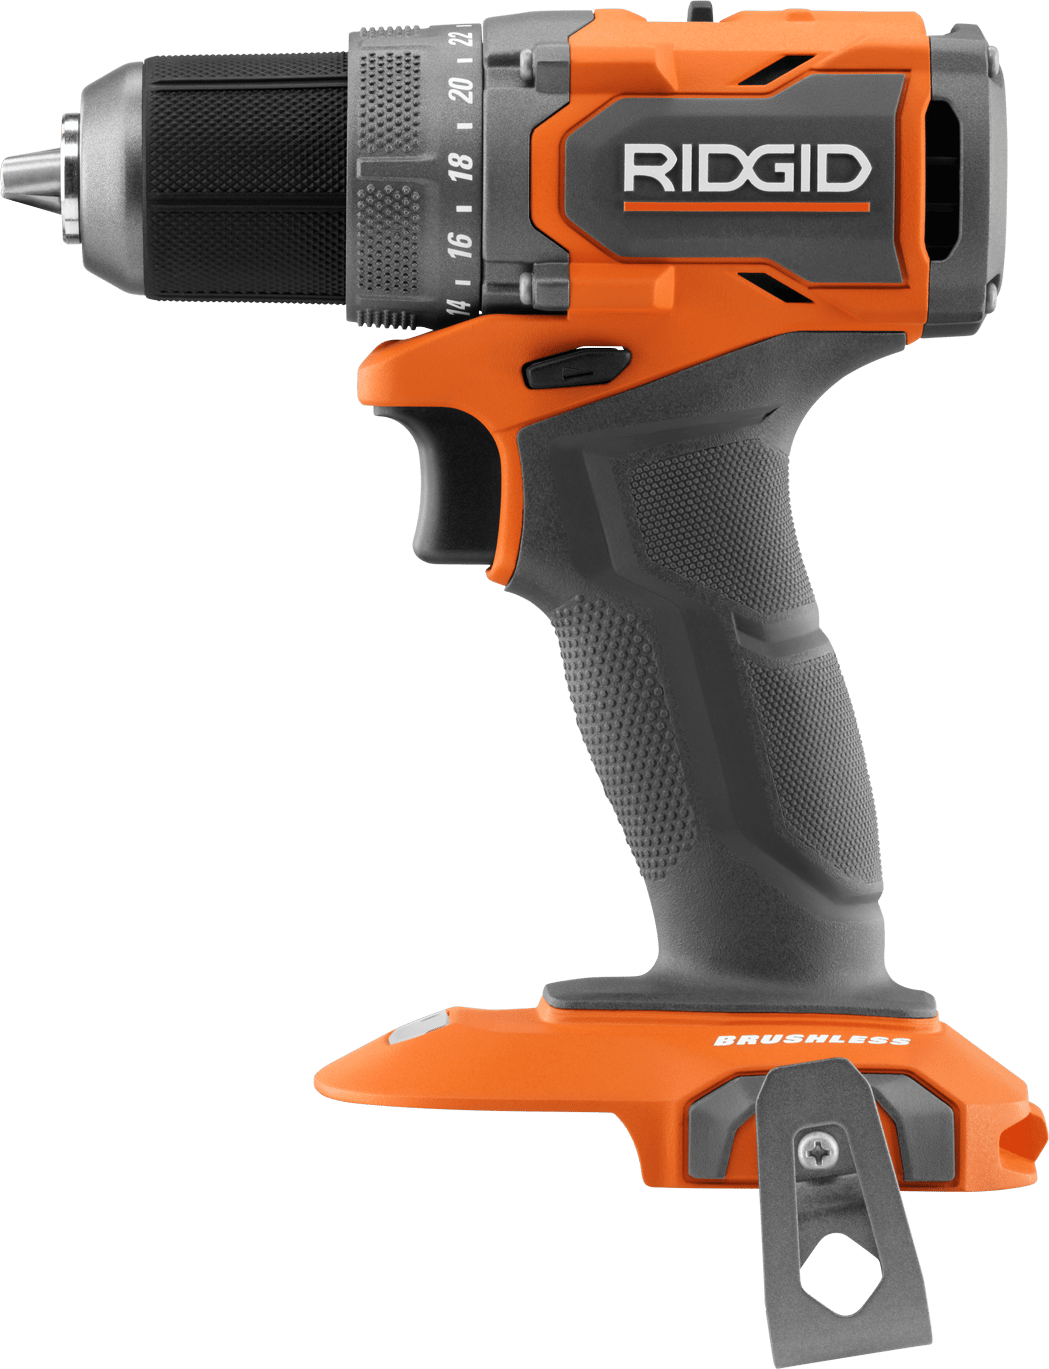 Handheld power drill, Pneumatic tool, Impact wrench, Rivet gun